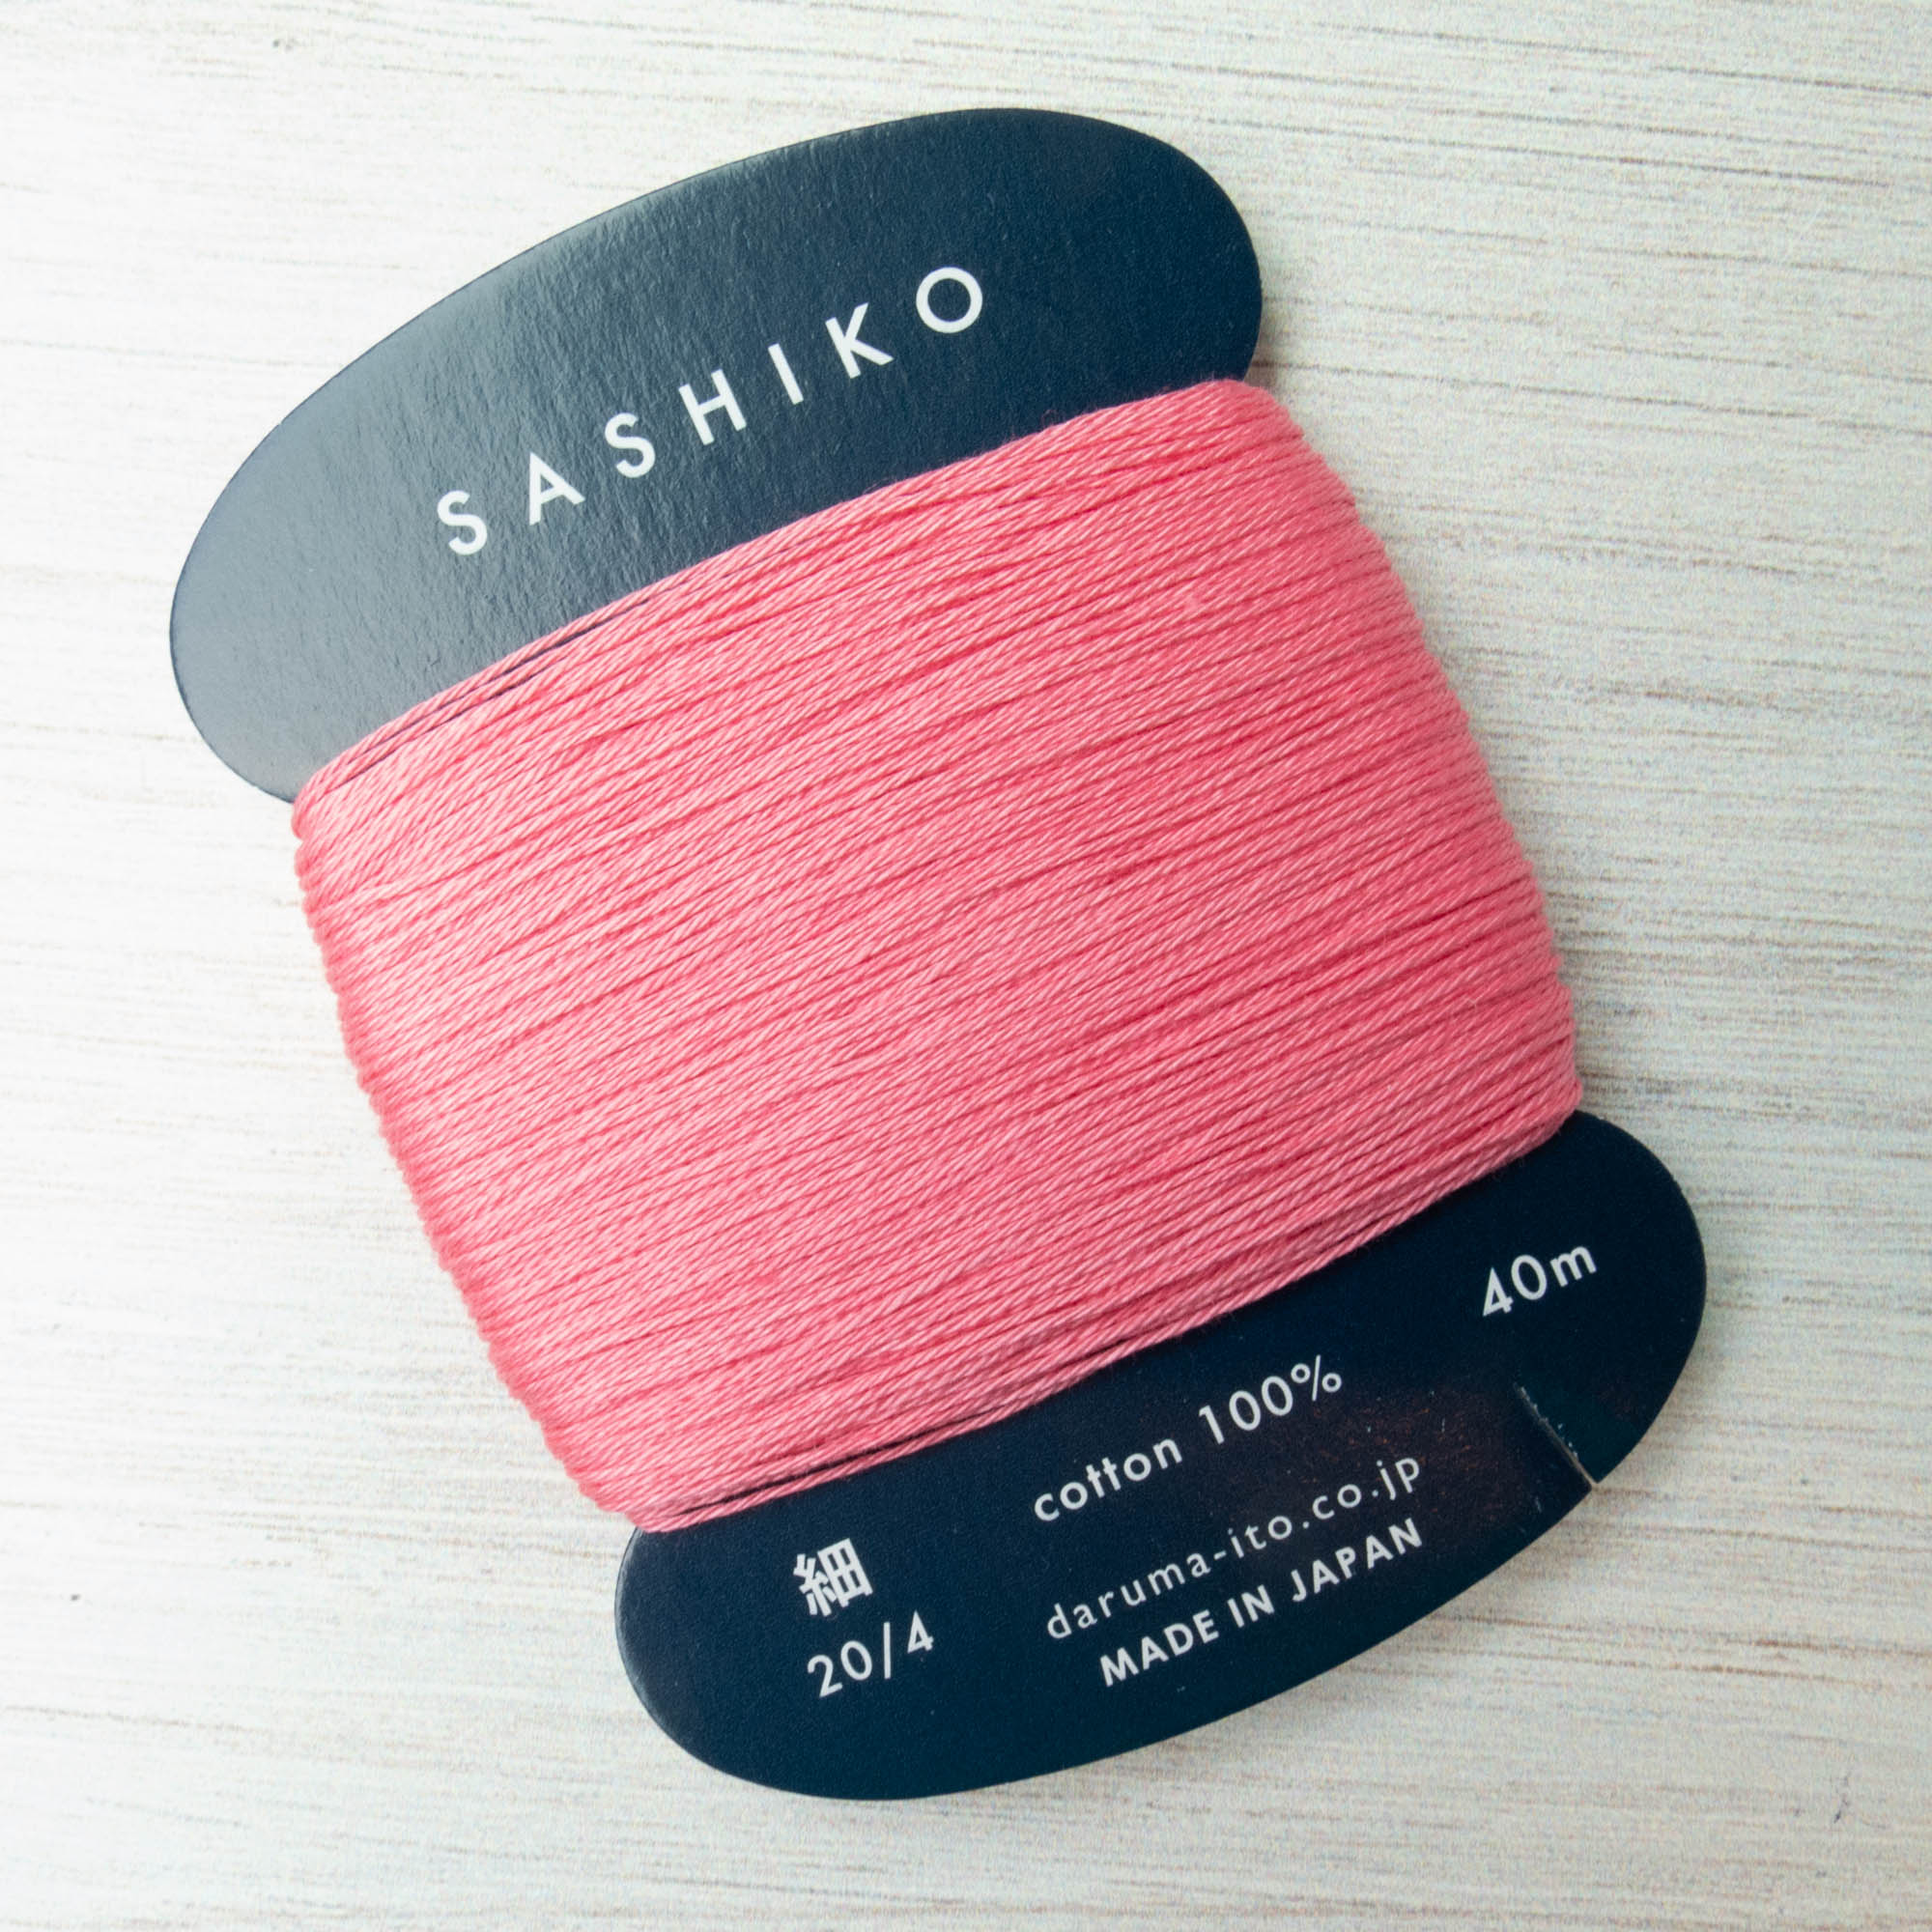 ORIM - Daruma - Sashiko Cotton Thread 20/6 - 0222 - Plum